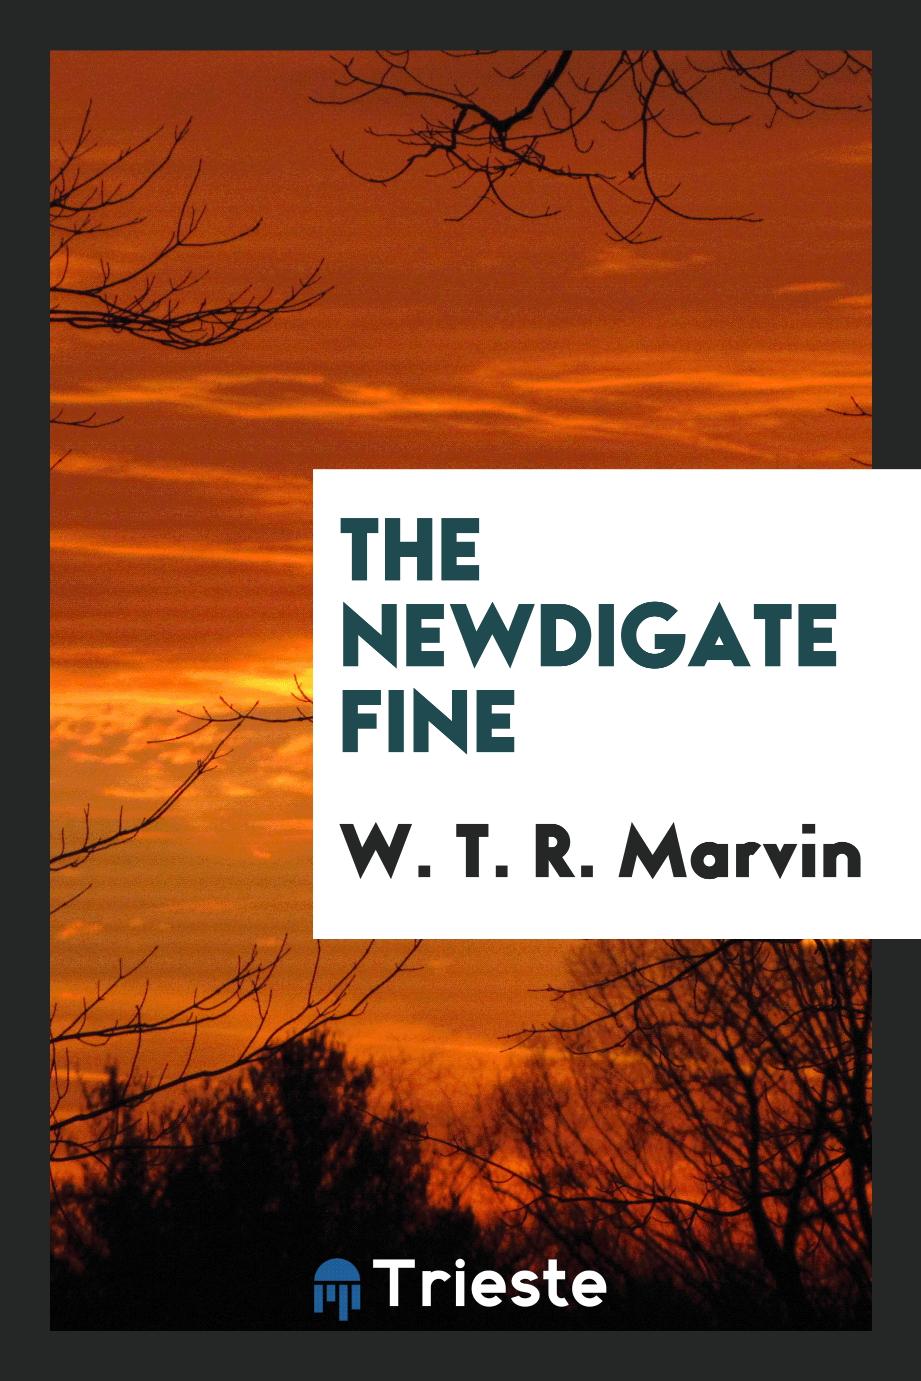 The Newdigate fine